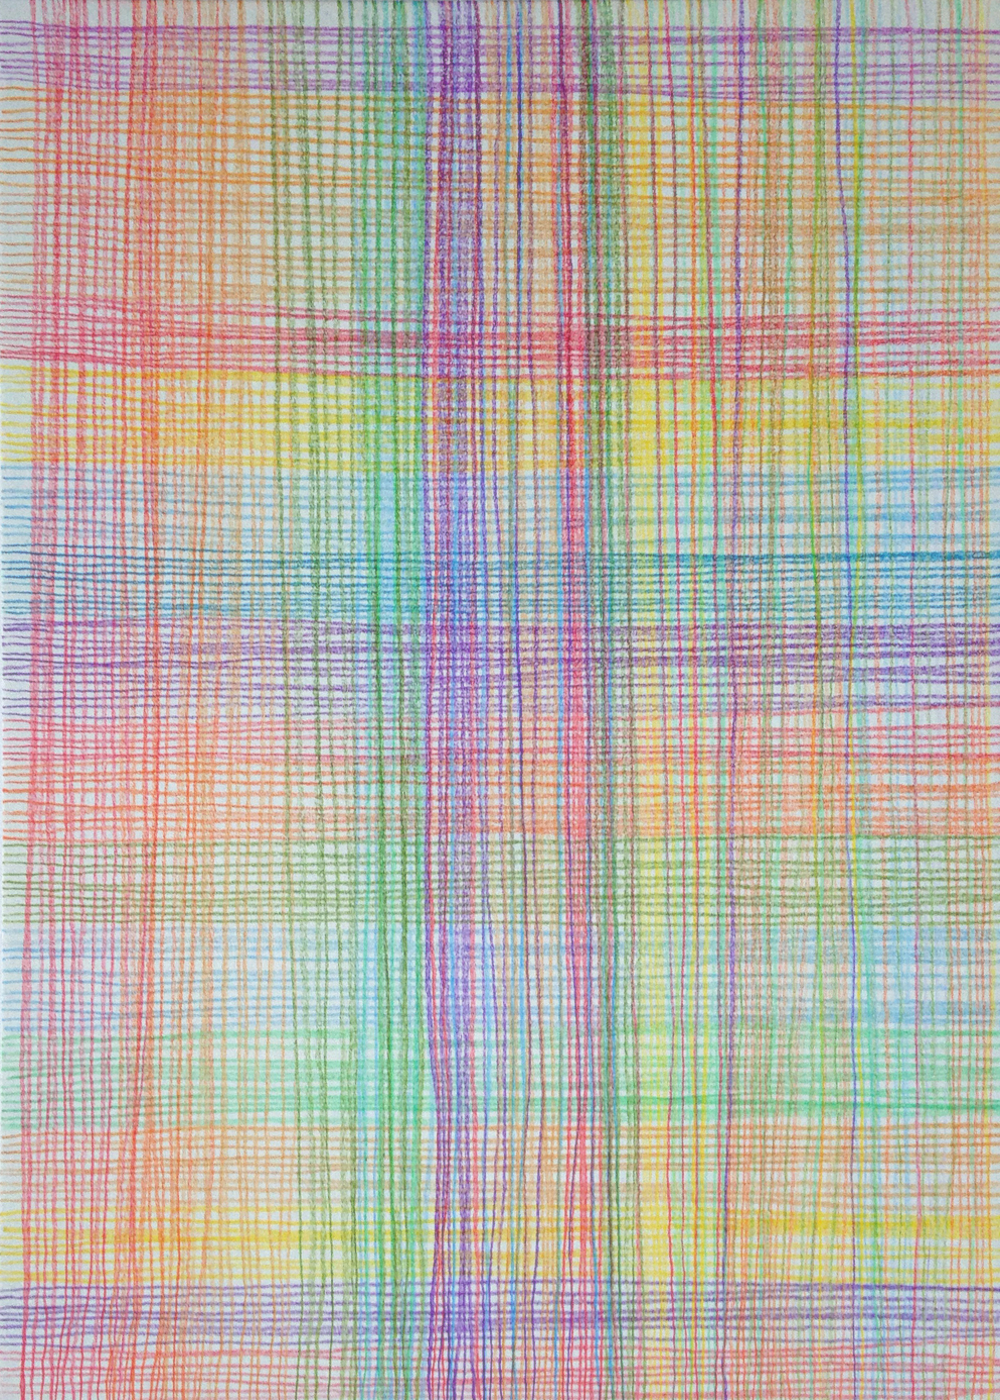 simone hamann_strings_textile9_12,7 x 17,7 colorpencil on card 2015